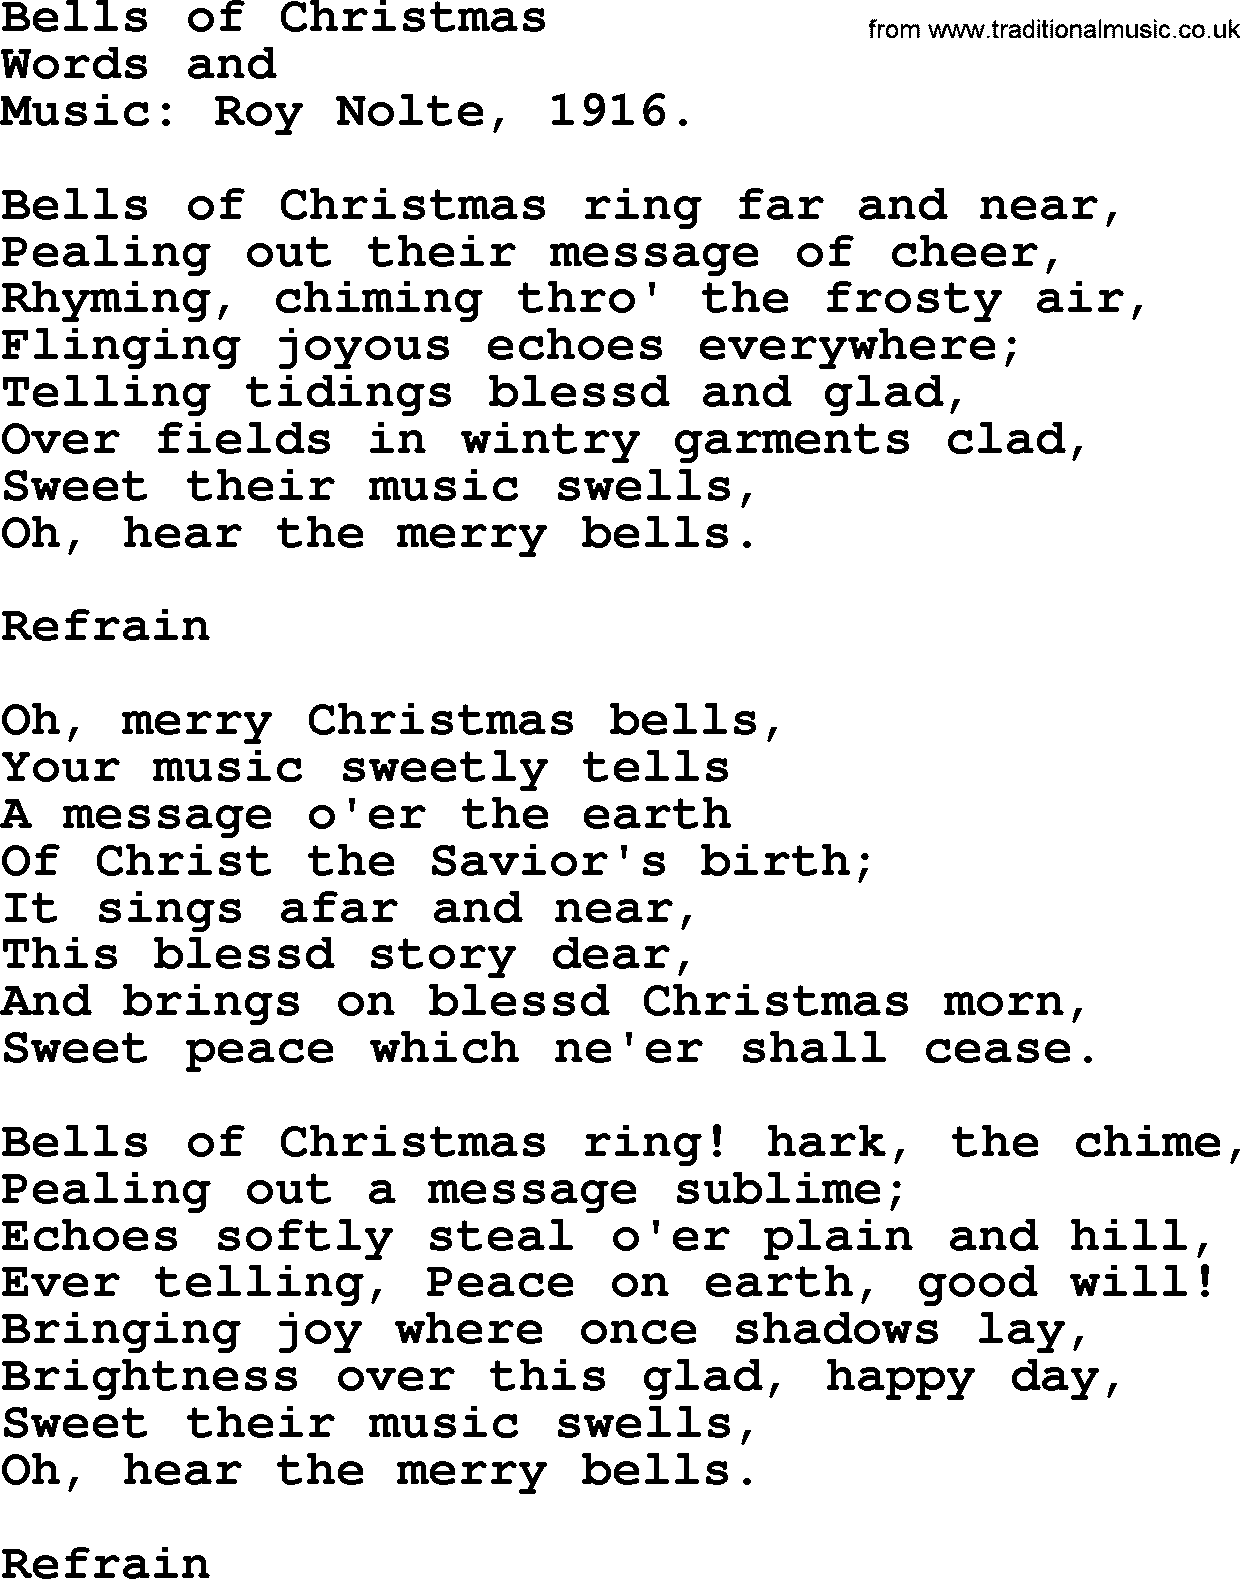 Christmas Hymns, Carols and Songs, title: Bells Of Christmas, lyrics with PDF